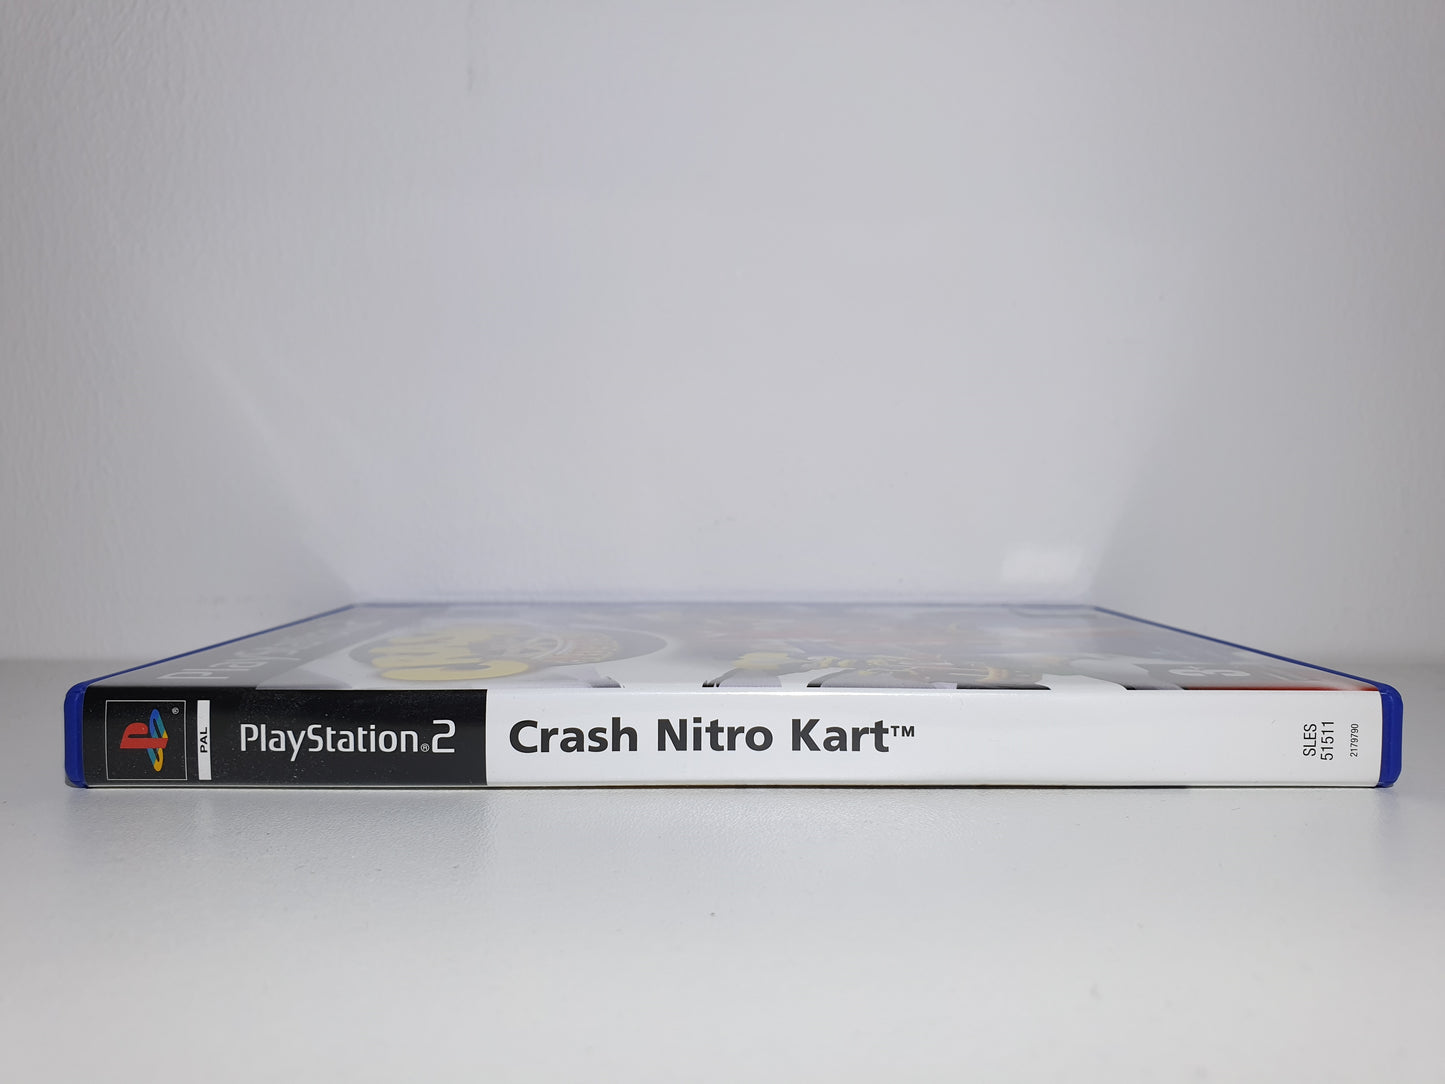 Crash Nitro Kart PS2 - Occasion excellent état